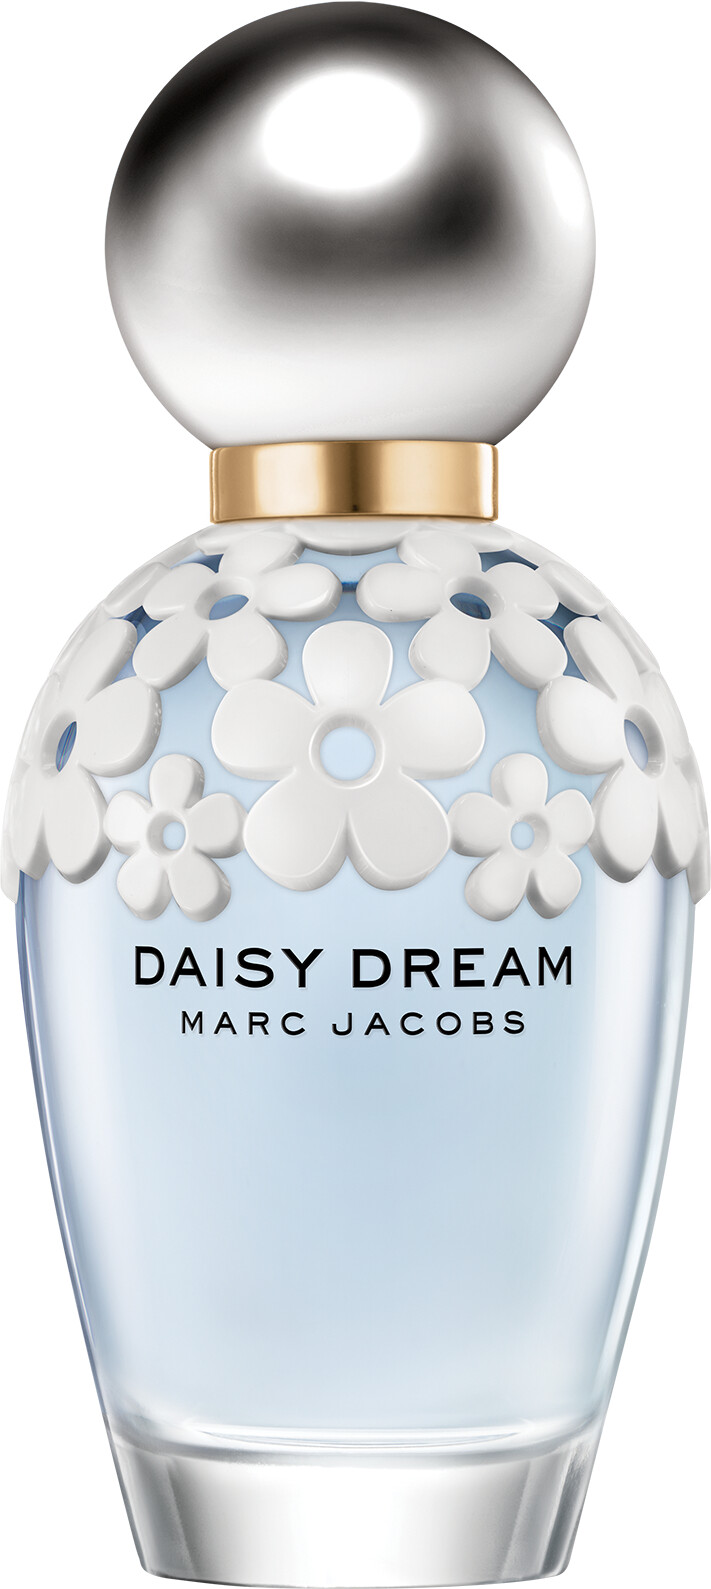 Marc Jacobs Daisy Dream Eau de Toilette Spray 100ml